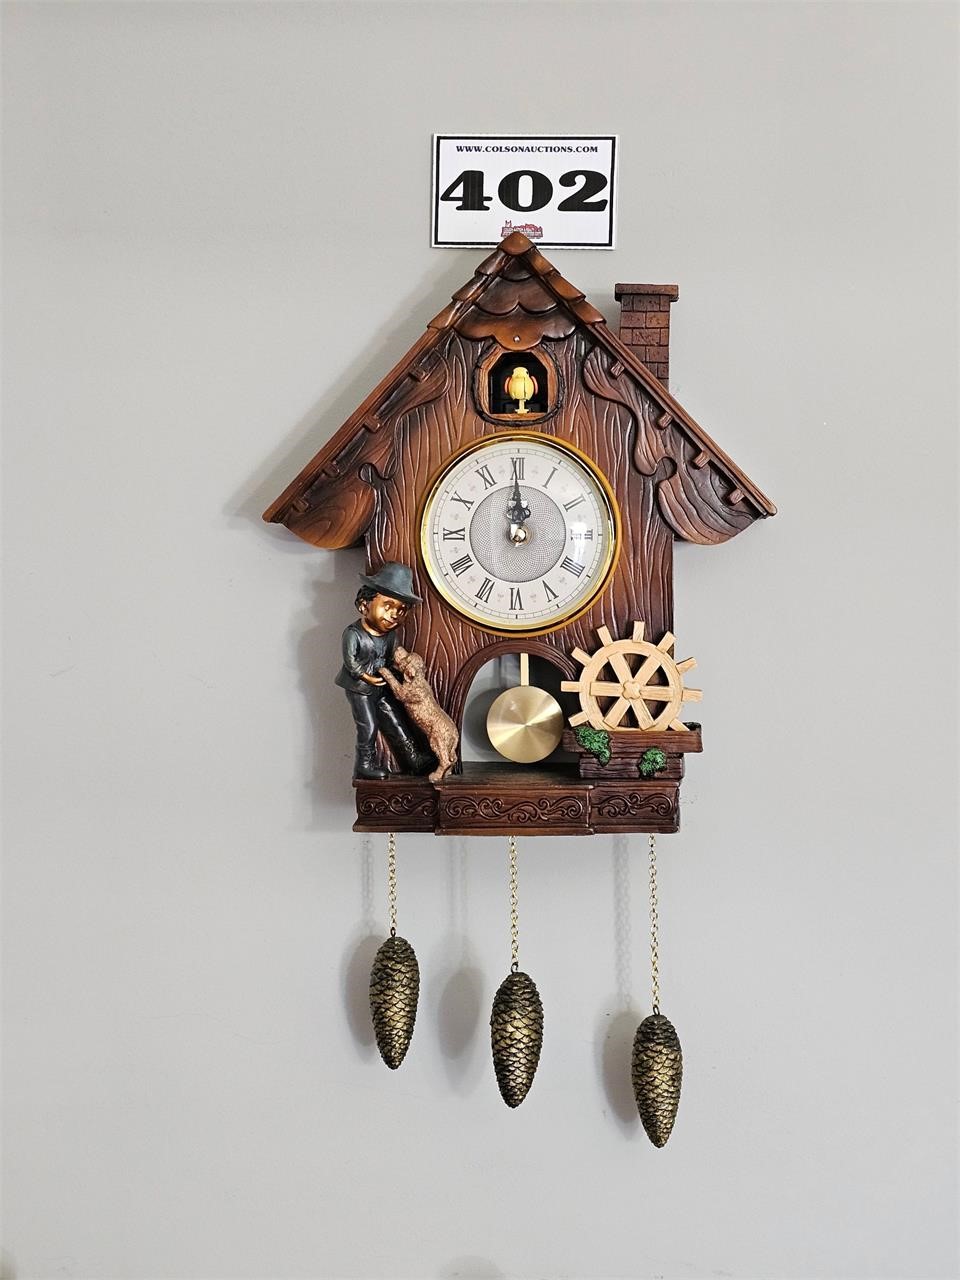 cuckoo clock - newer - not wind up